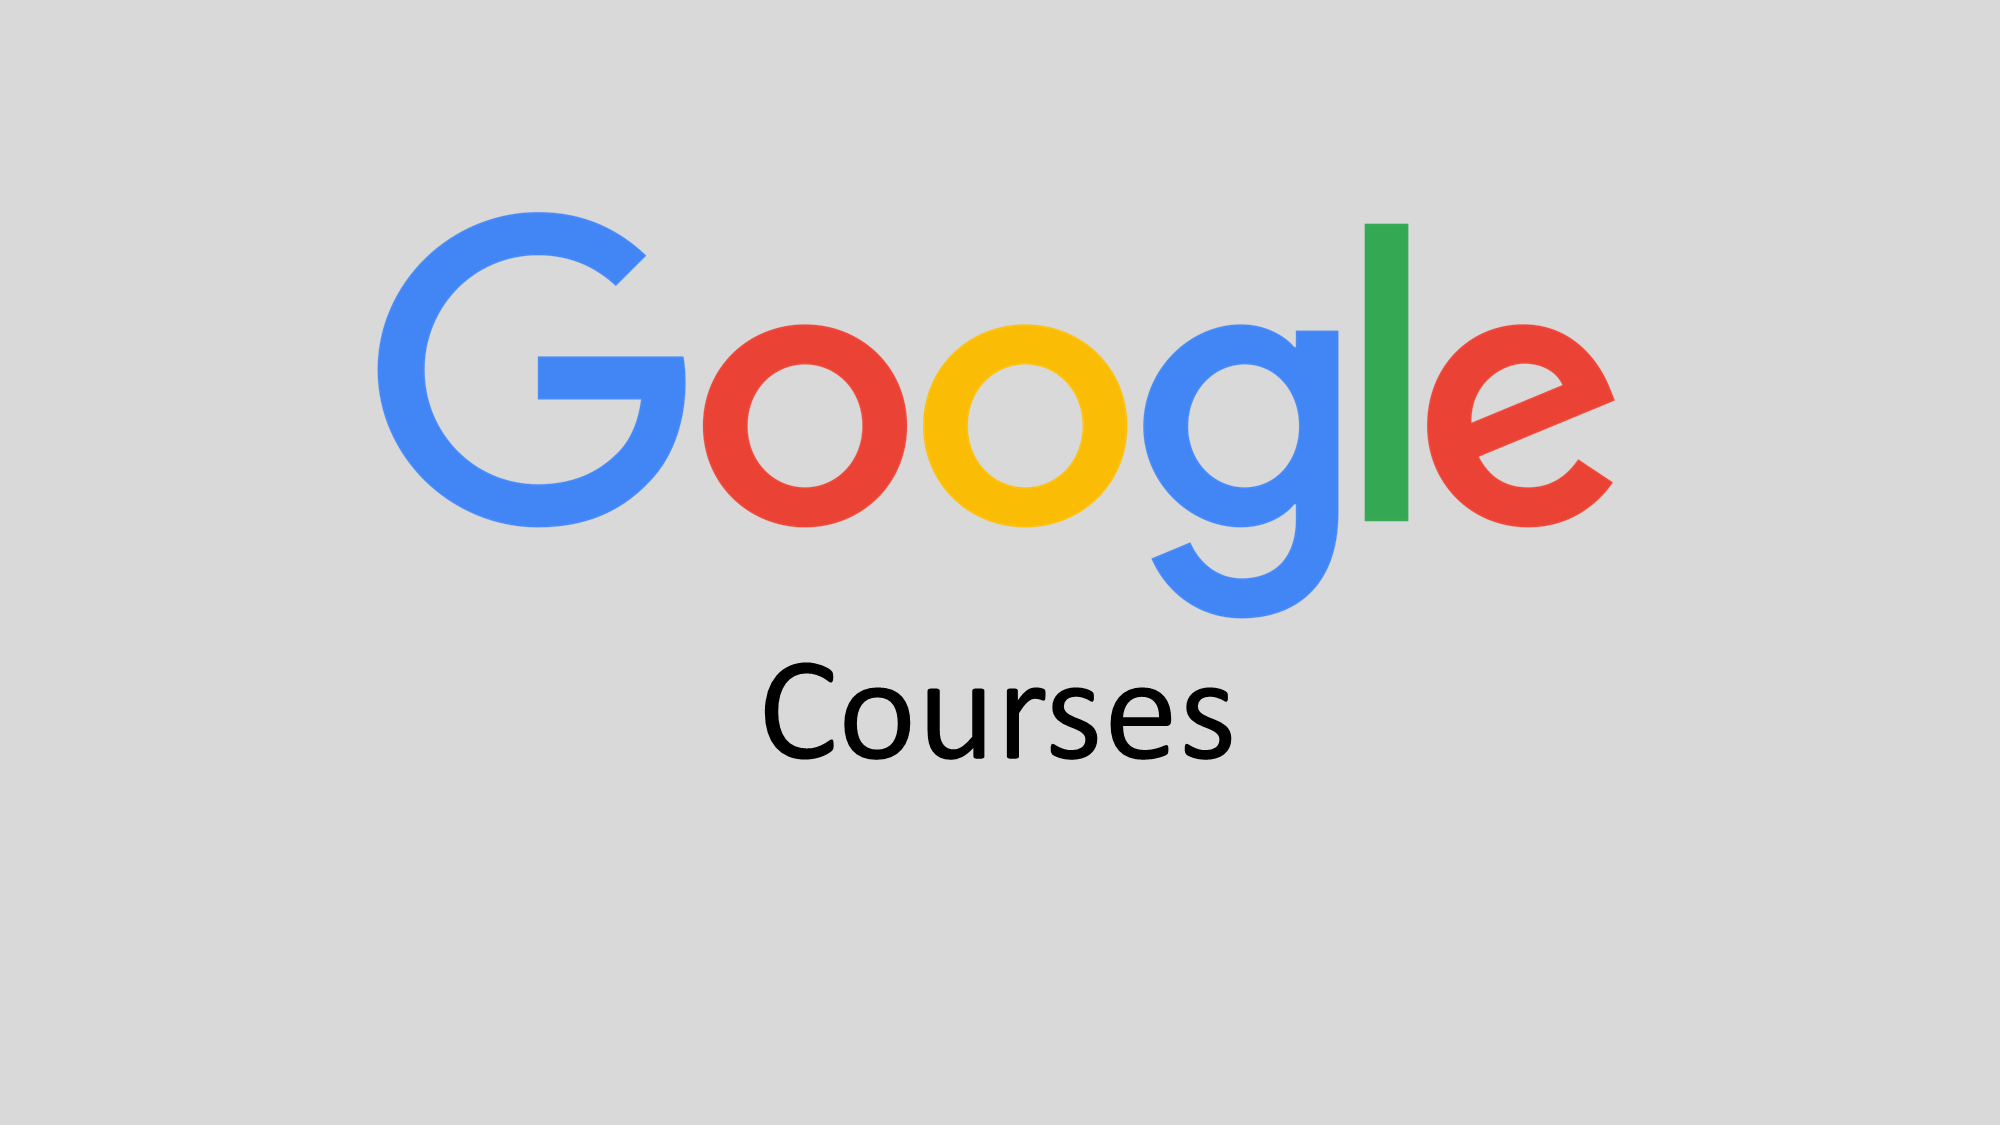 Google courses